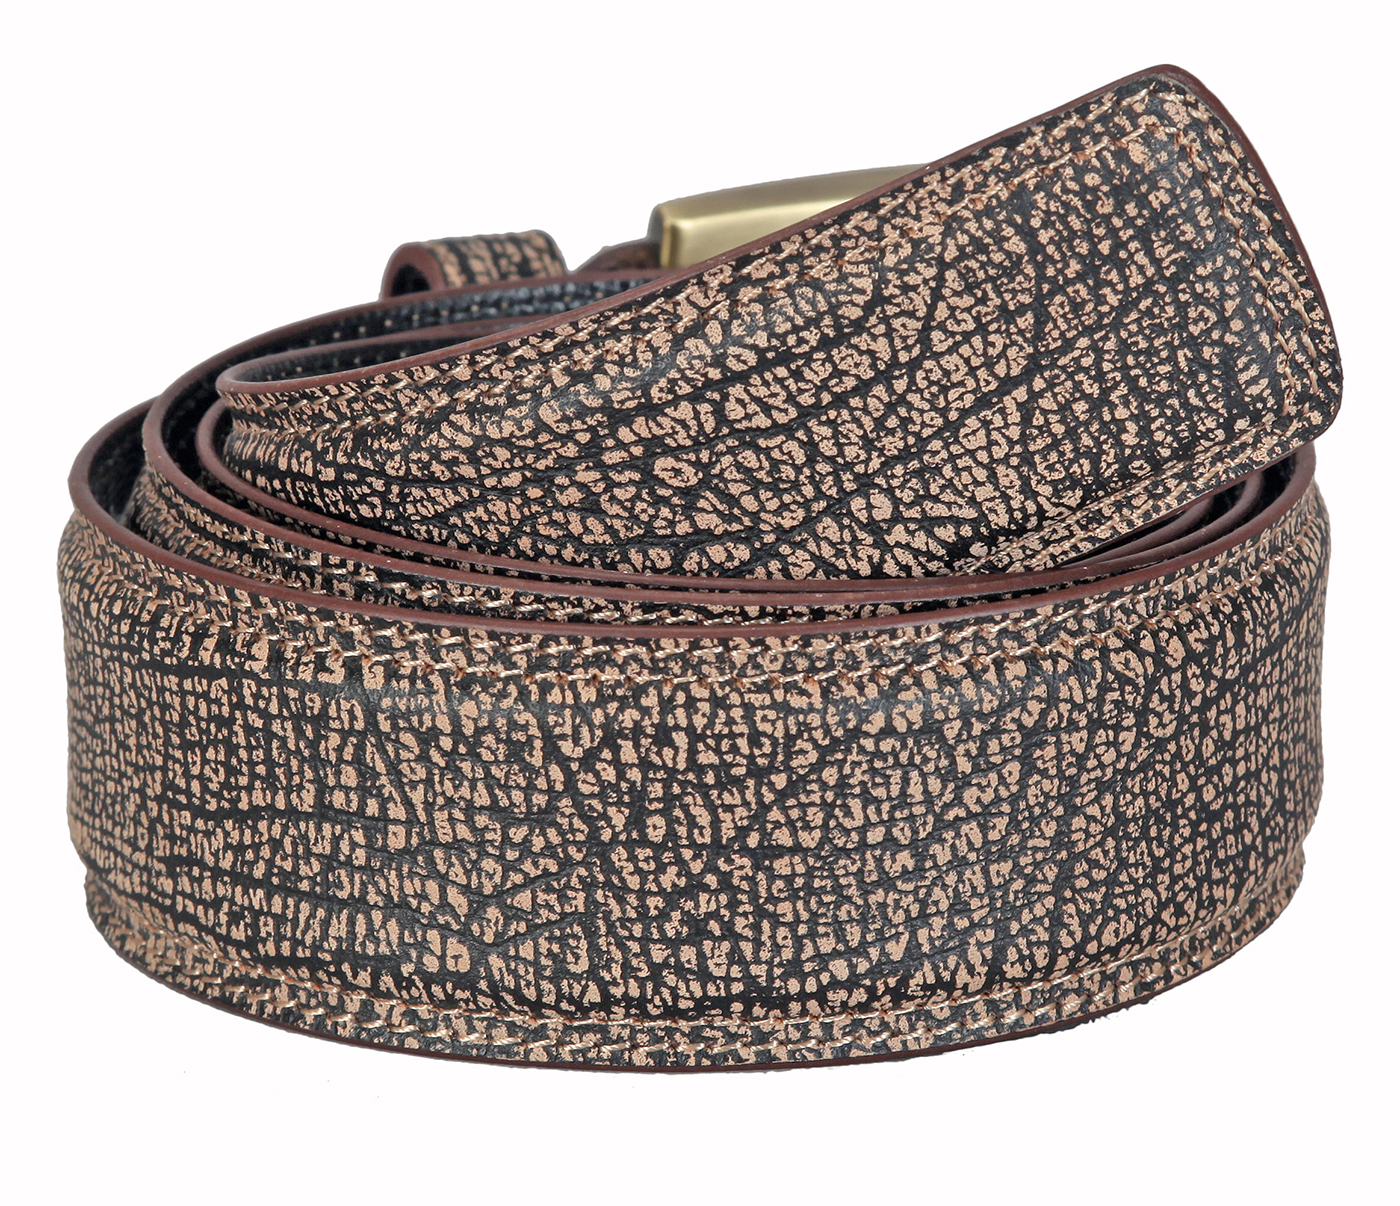 BL169--Men's stylish Casual wear belt in Genuine Leather - Brown.